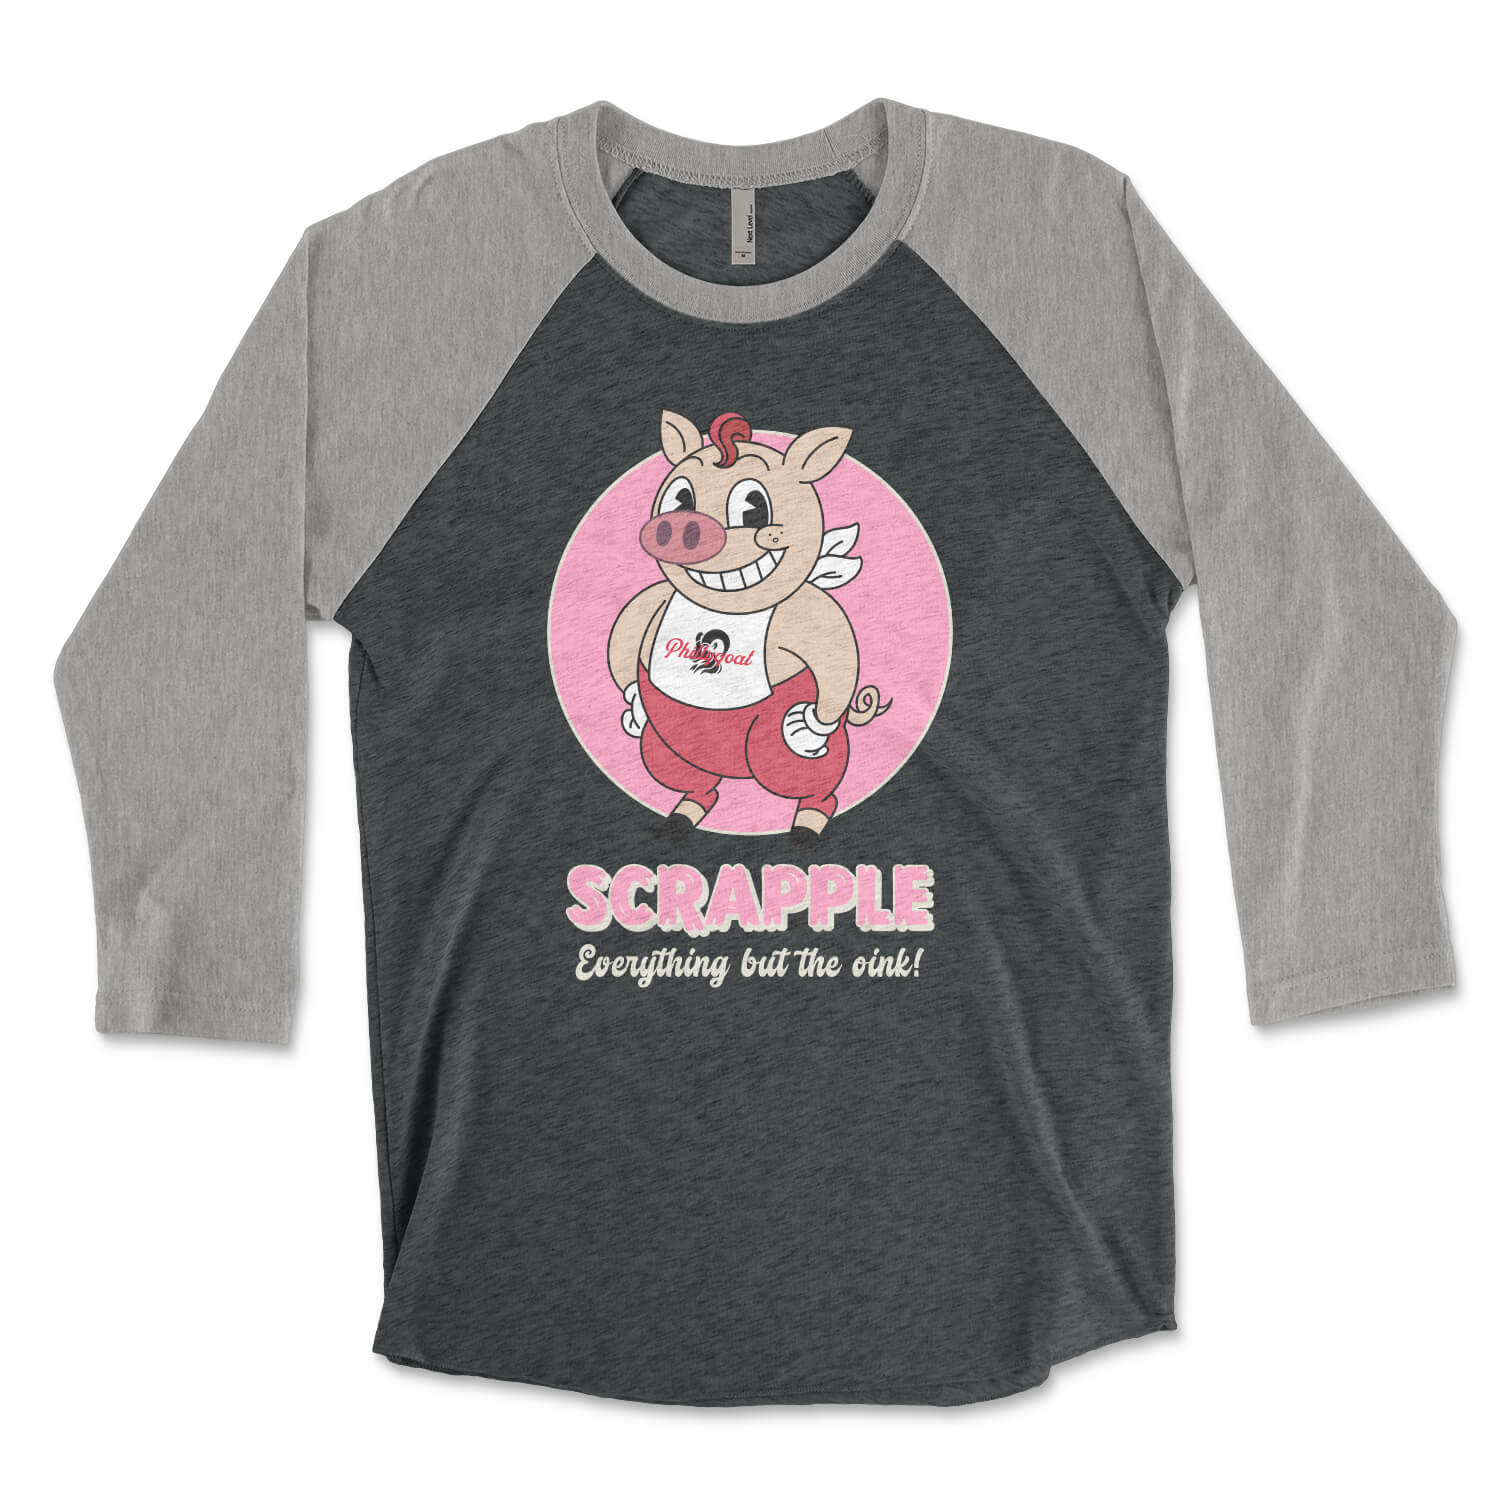 Philadelphia scrapple cartoon pig on a heather grey and vintage black triblend raglan t-shirt from Phillygoat